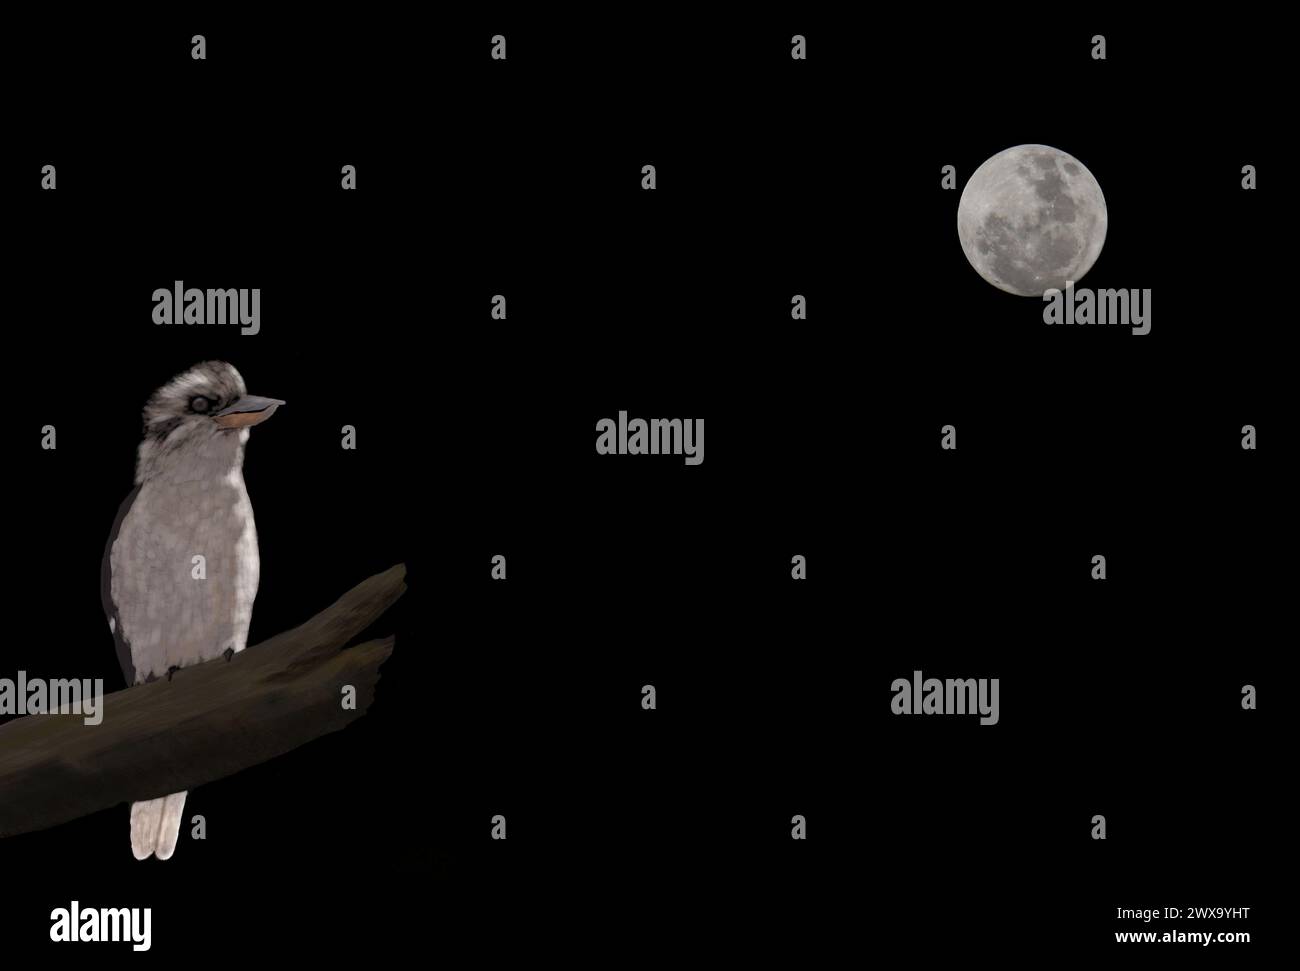 Kookaburra illustration and the moon photo double exposure Stock Photo